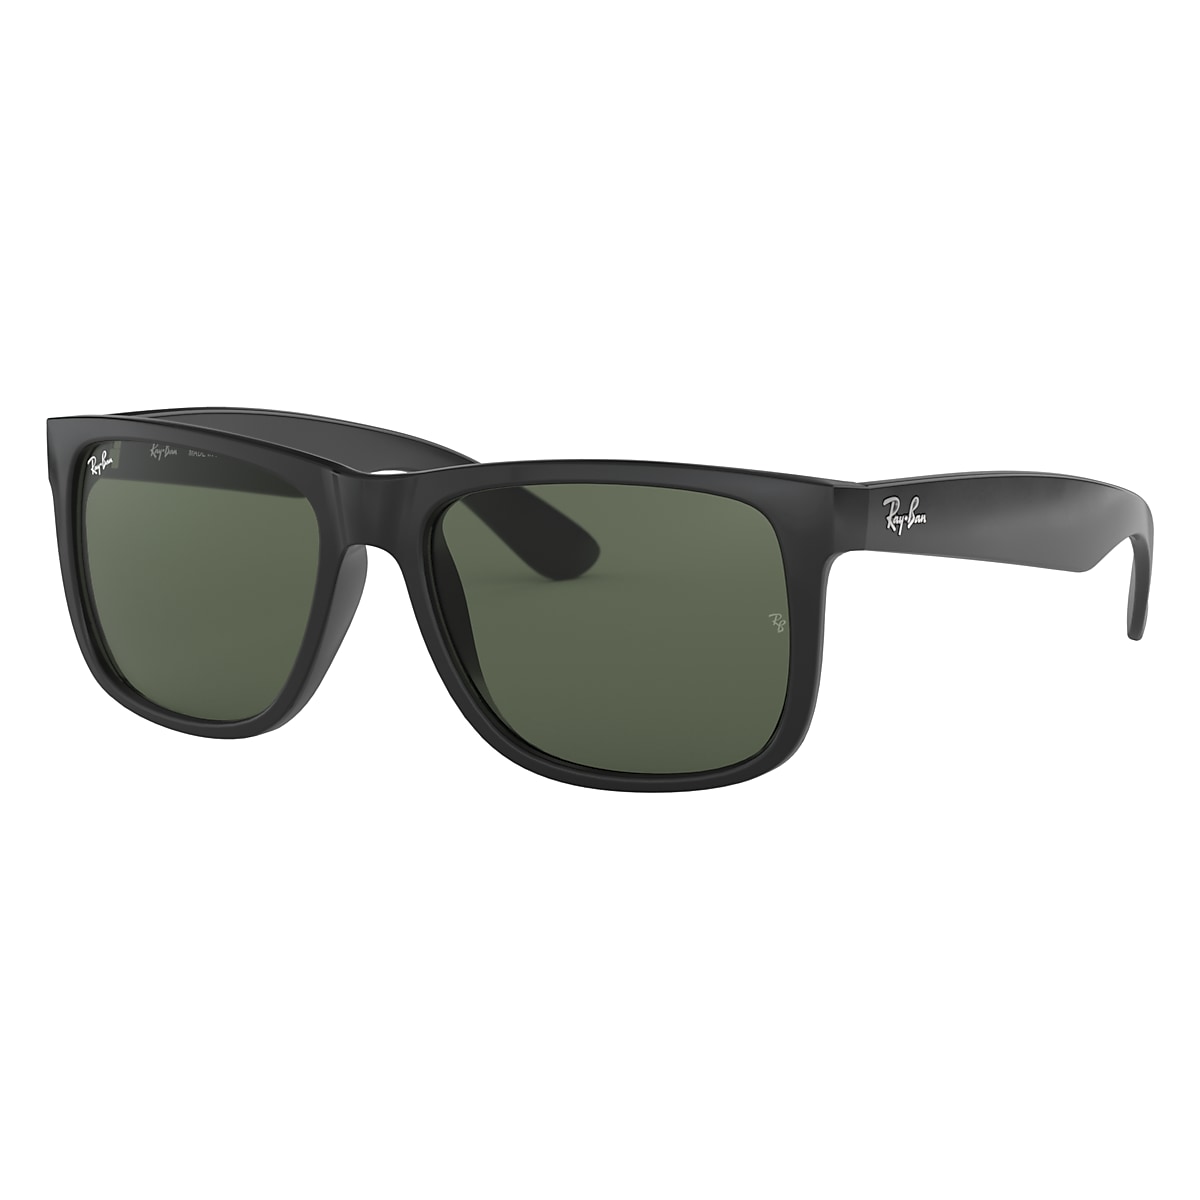 Uitroepteken Vriendin regering Justin Classic Sunglasses in Black and Dark Green | Ray-Ban®